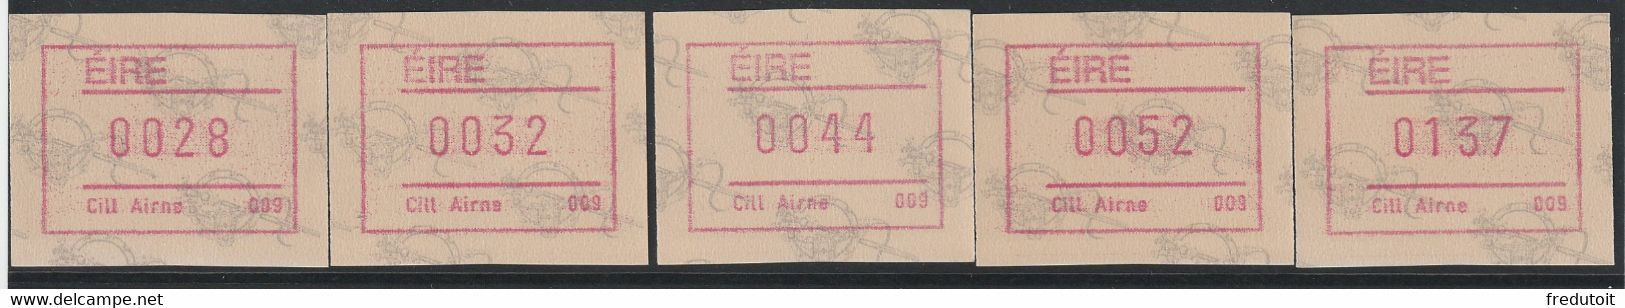 IRLANDE - Timbres Distributeurs / FRAMA  ATM - N°4** (1992) Cill Airne 009 - Affrancature Meccaniche/Frama